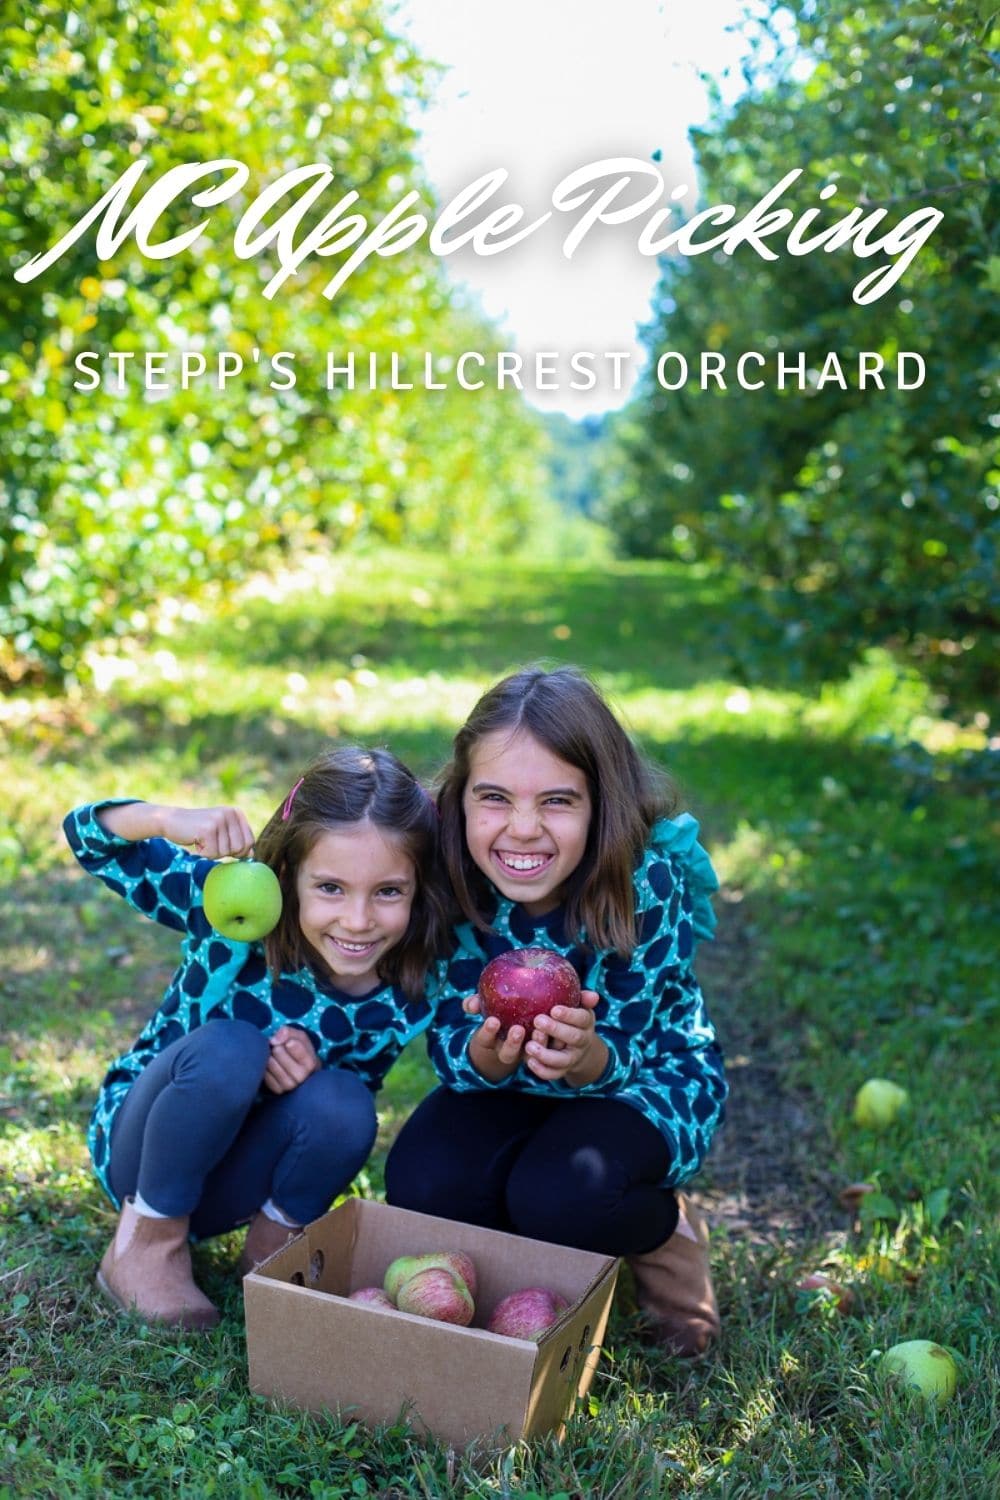 North Caolina apple picking- Stepp's Hillcrest Orchard